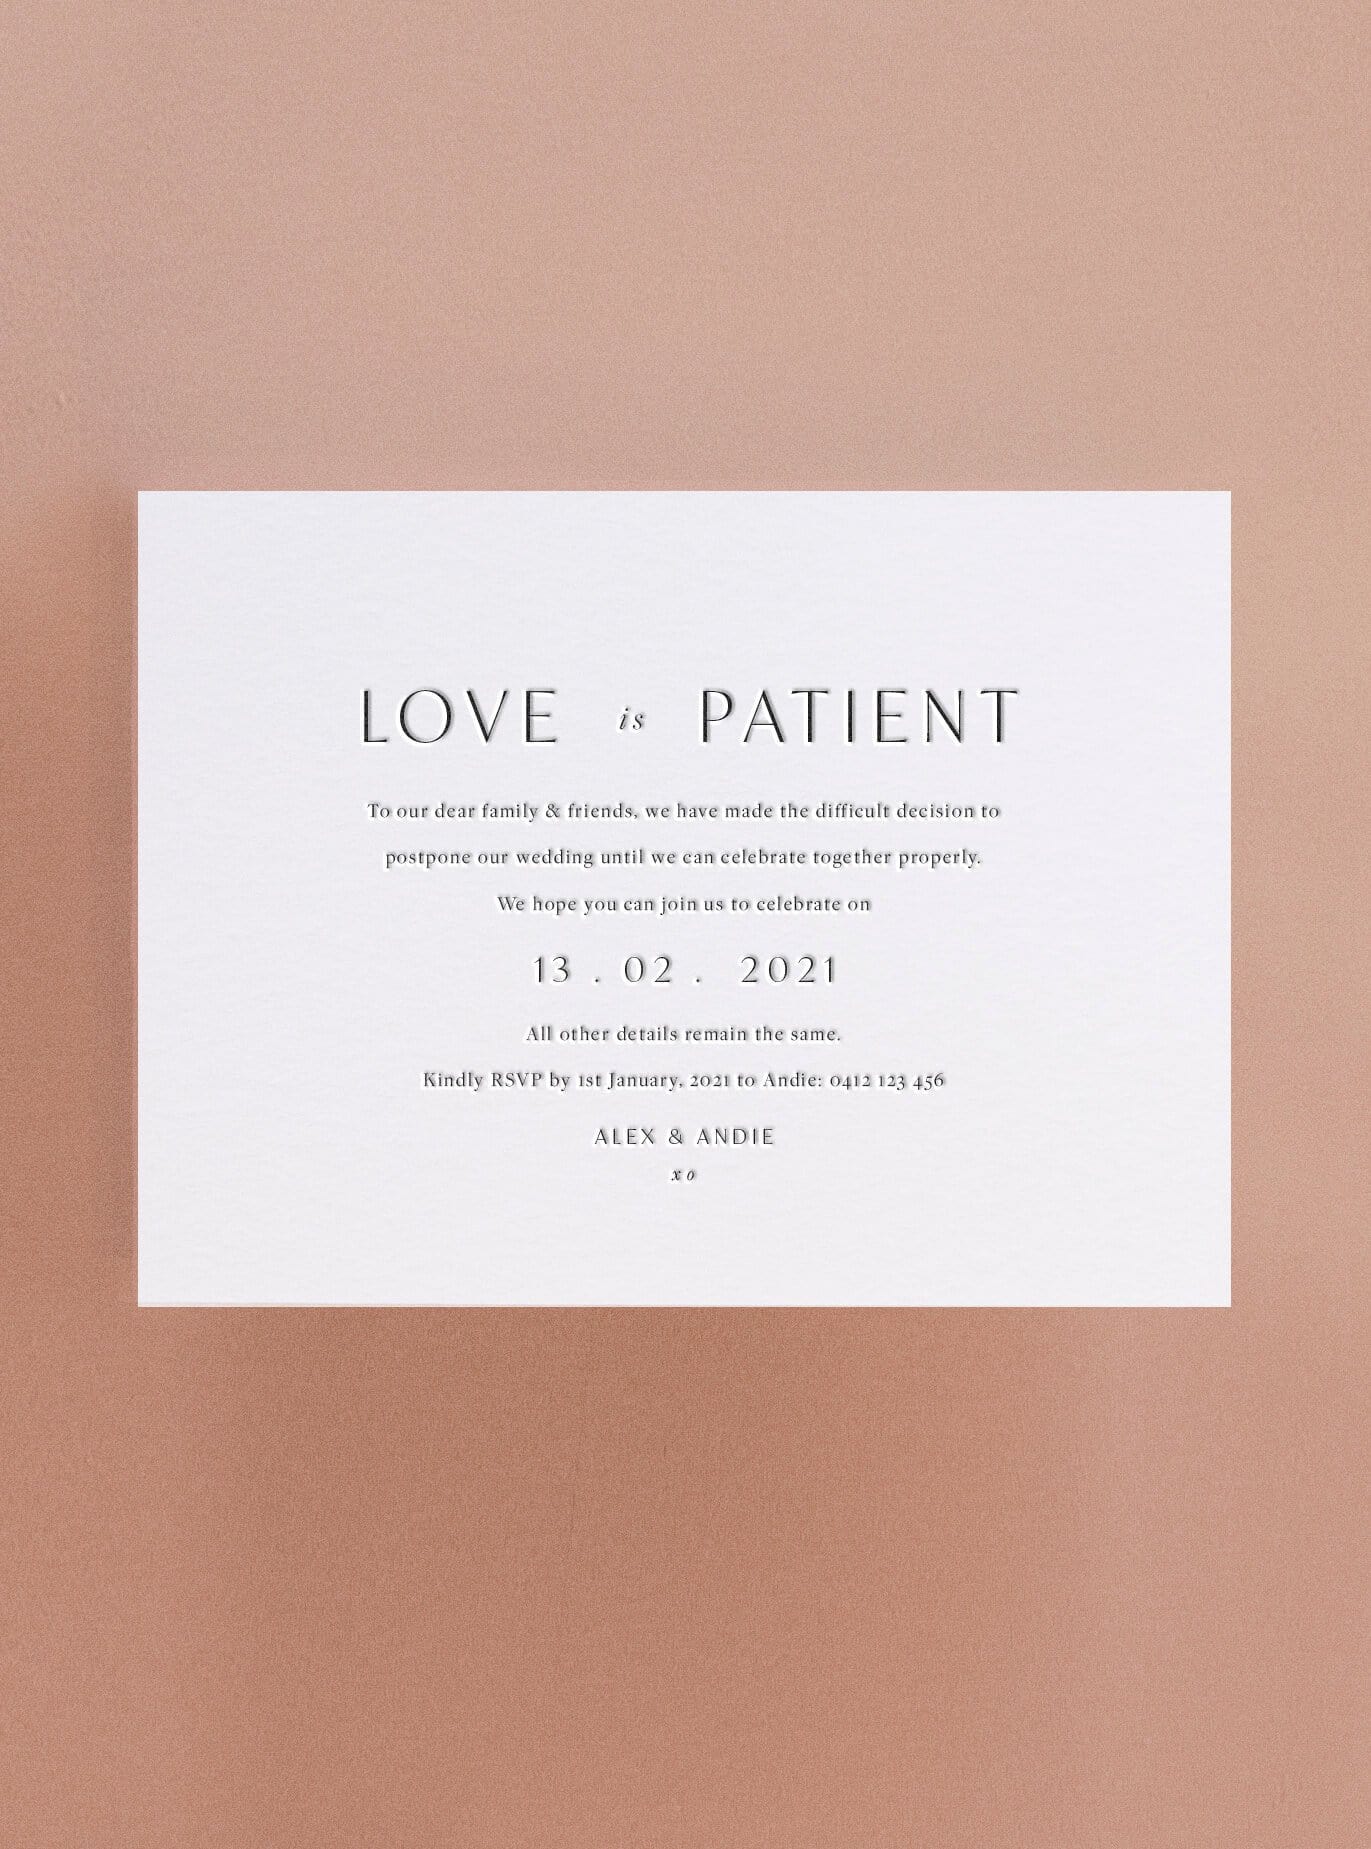 Love is Patient - Letterpress Change the Date Card